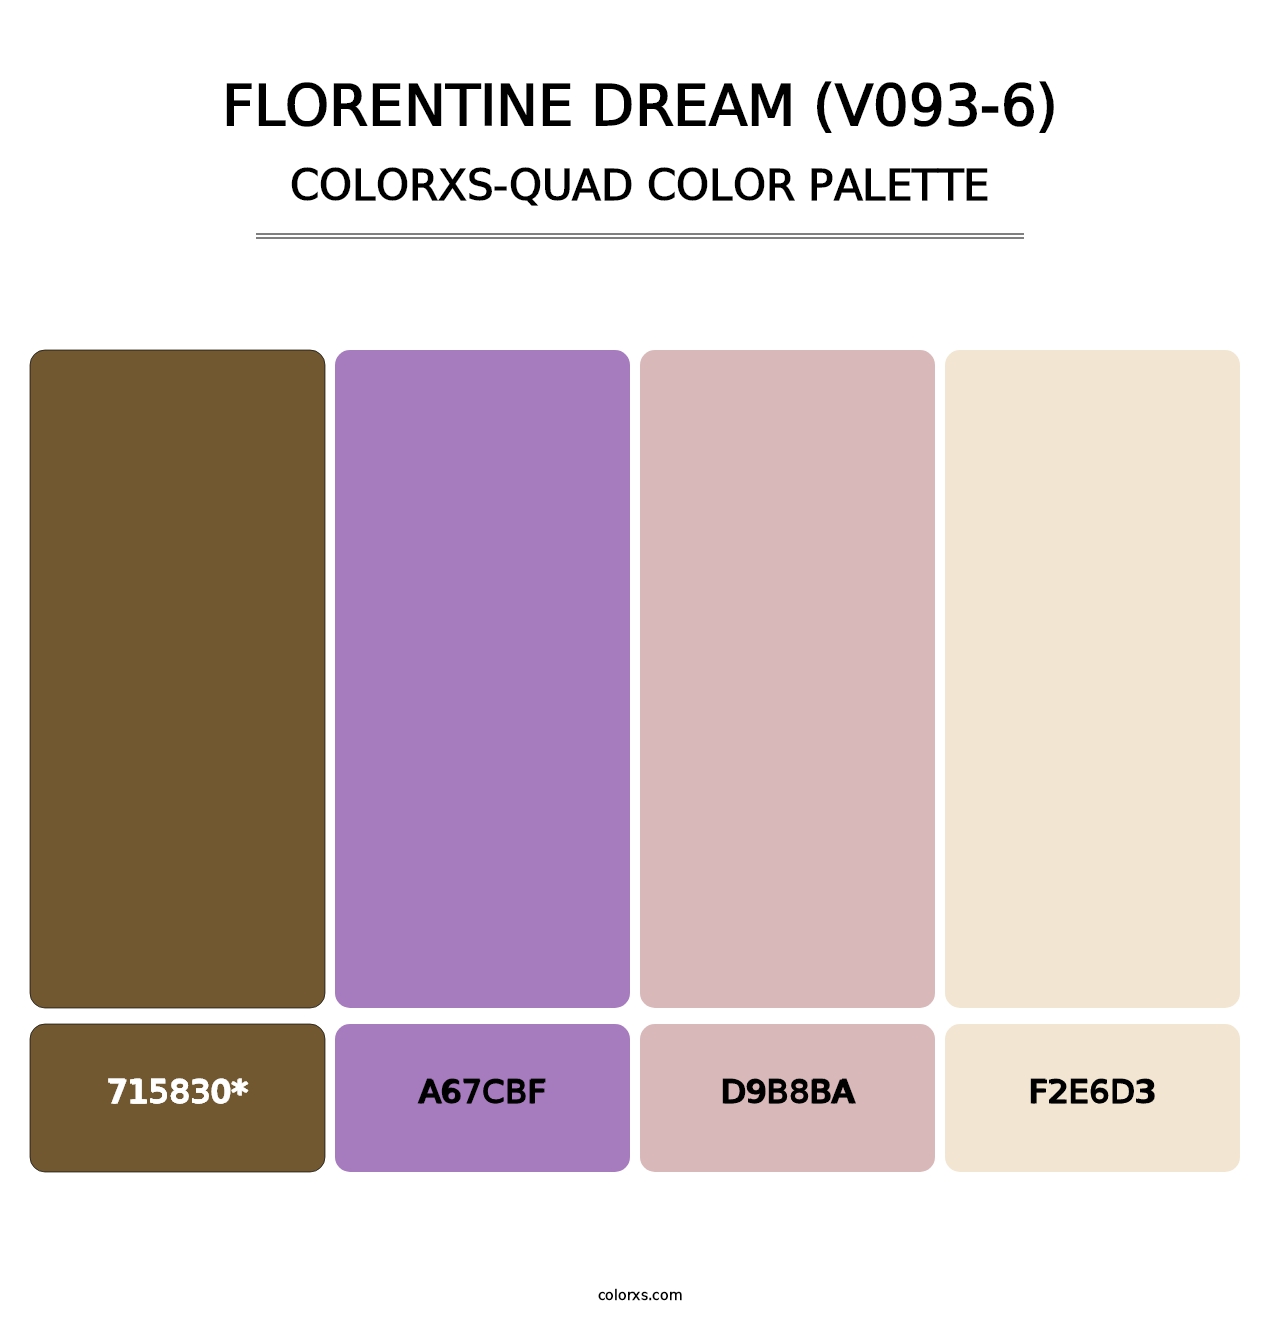 Florentine Dream (V093-6) - Colorxs Quad Palette